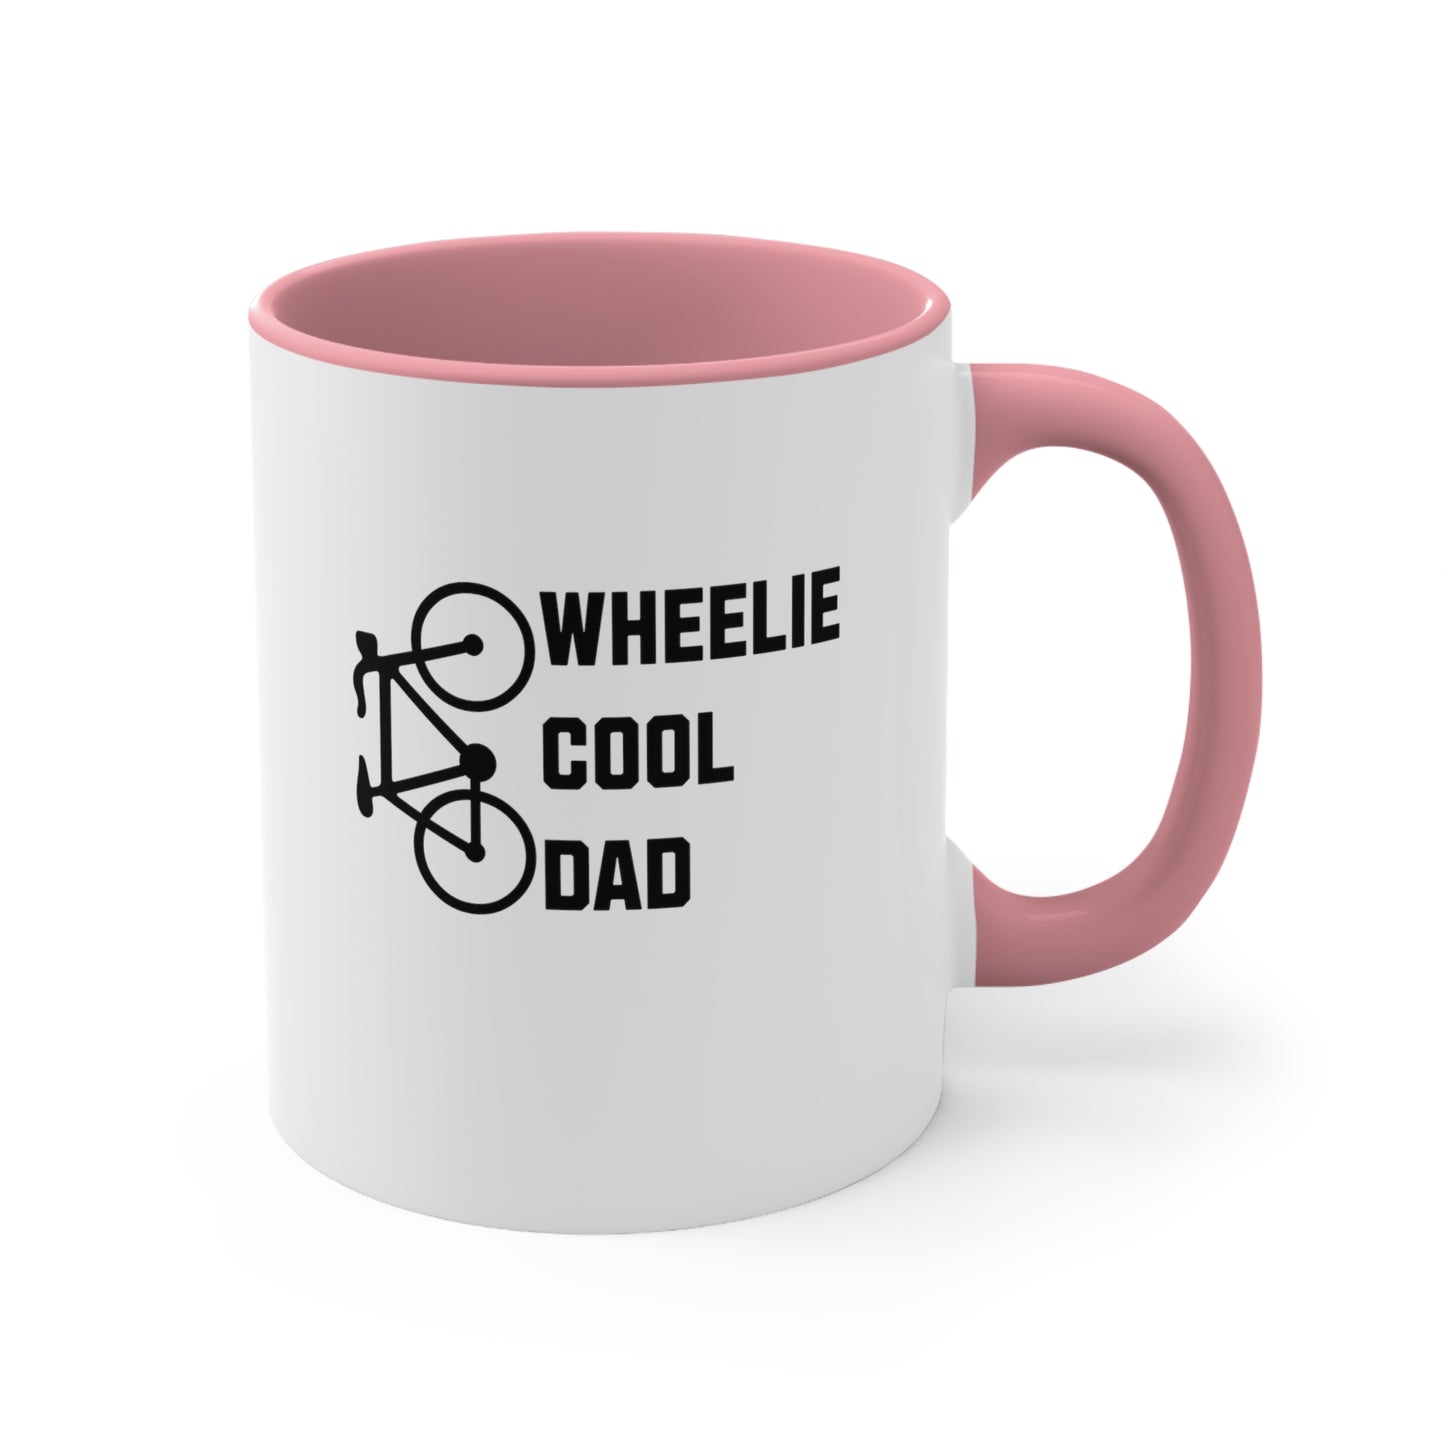 Wheelie Cool Dad - Bicycle mug